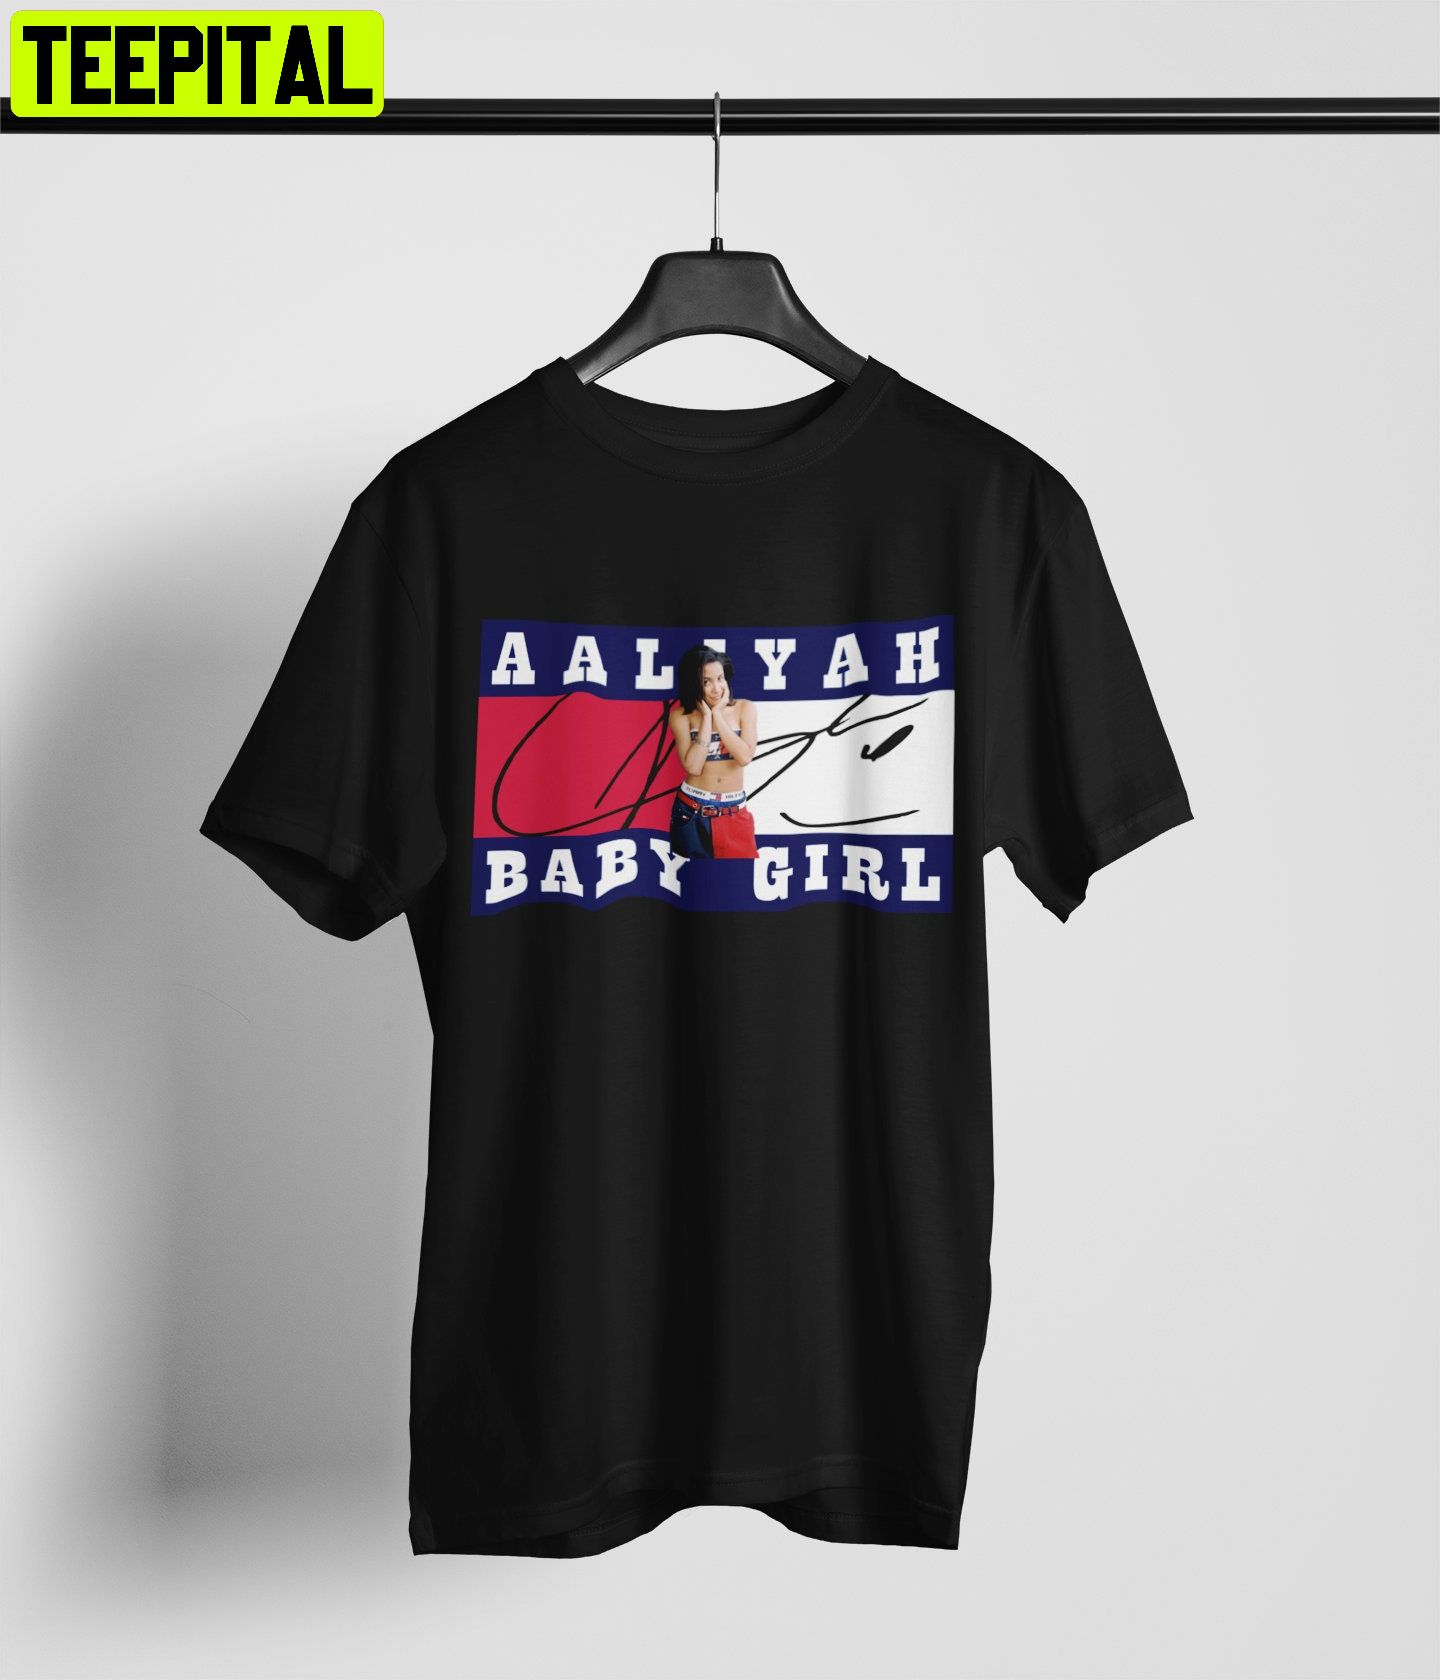 Aaliyah Baby Girl Singer Vintage Inspired 90s Rap Unisex T-Shirt